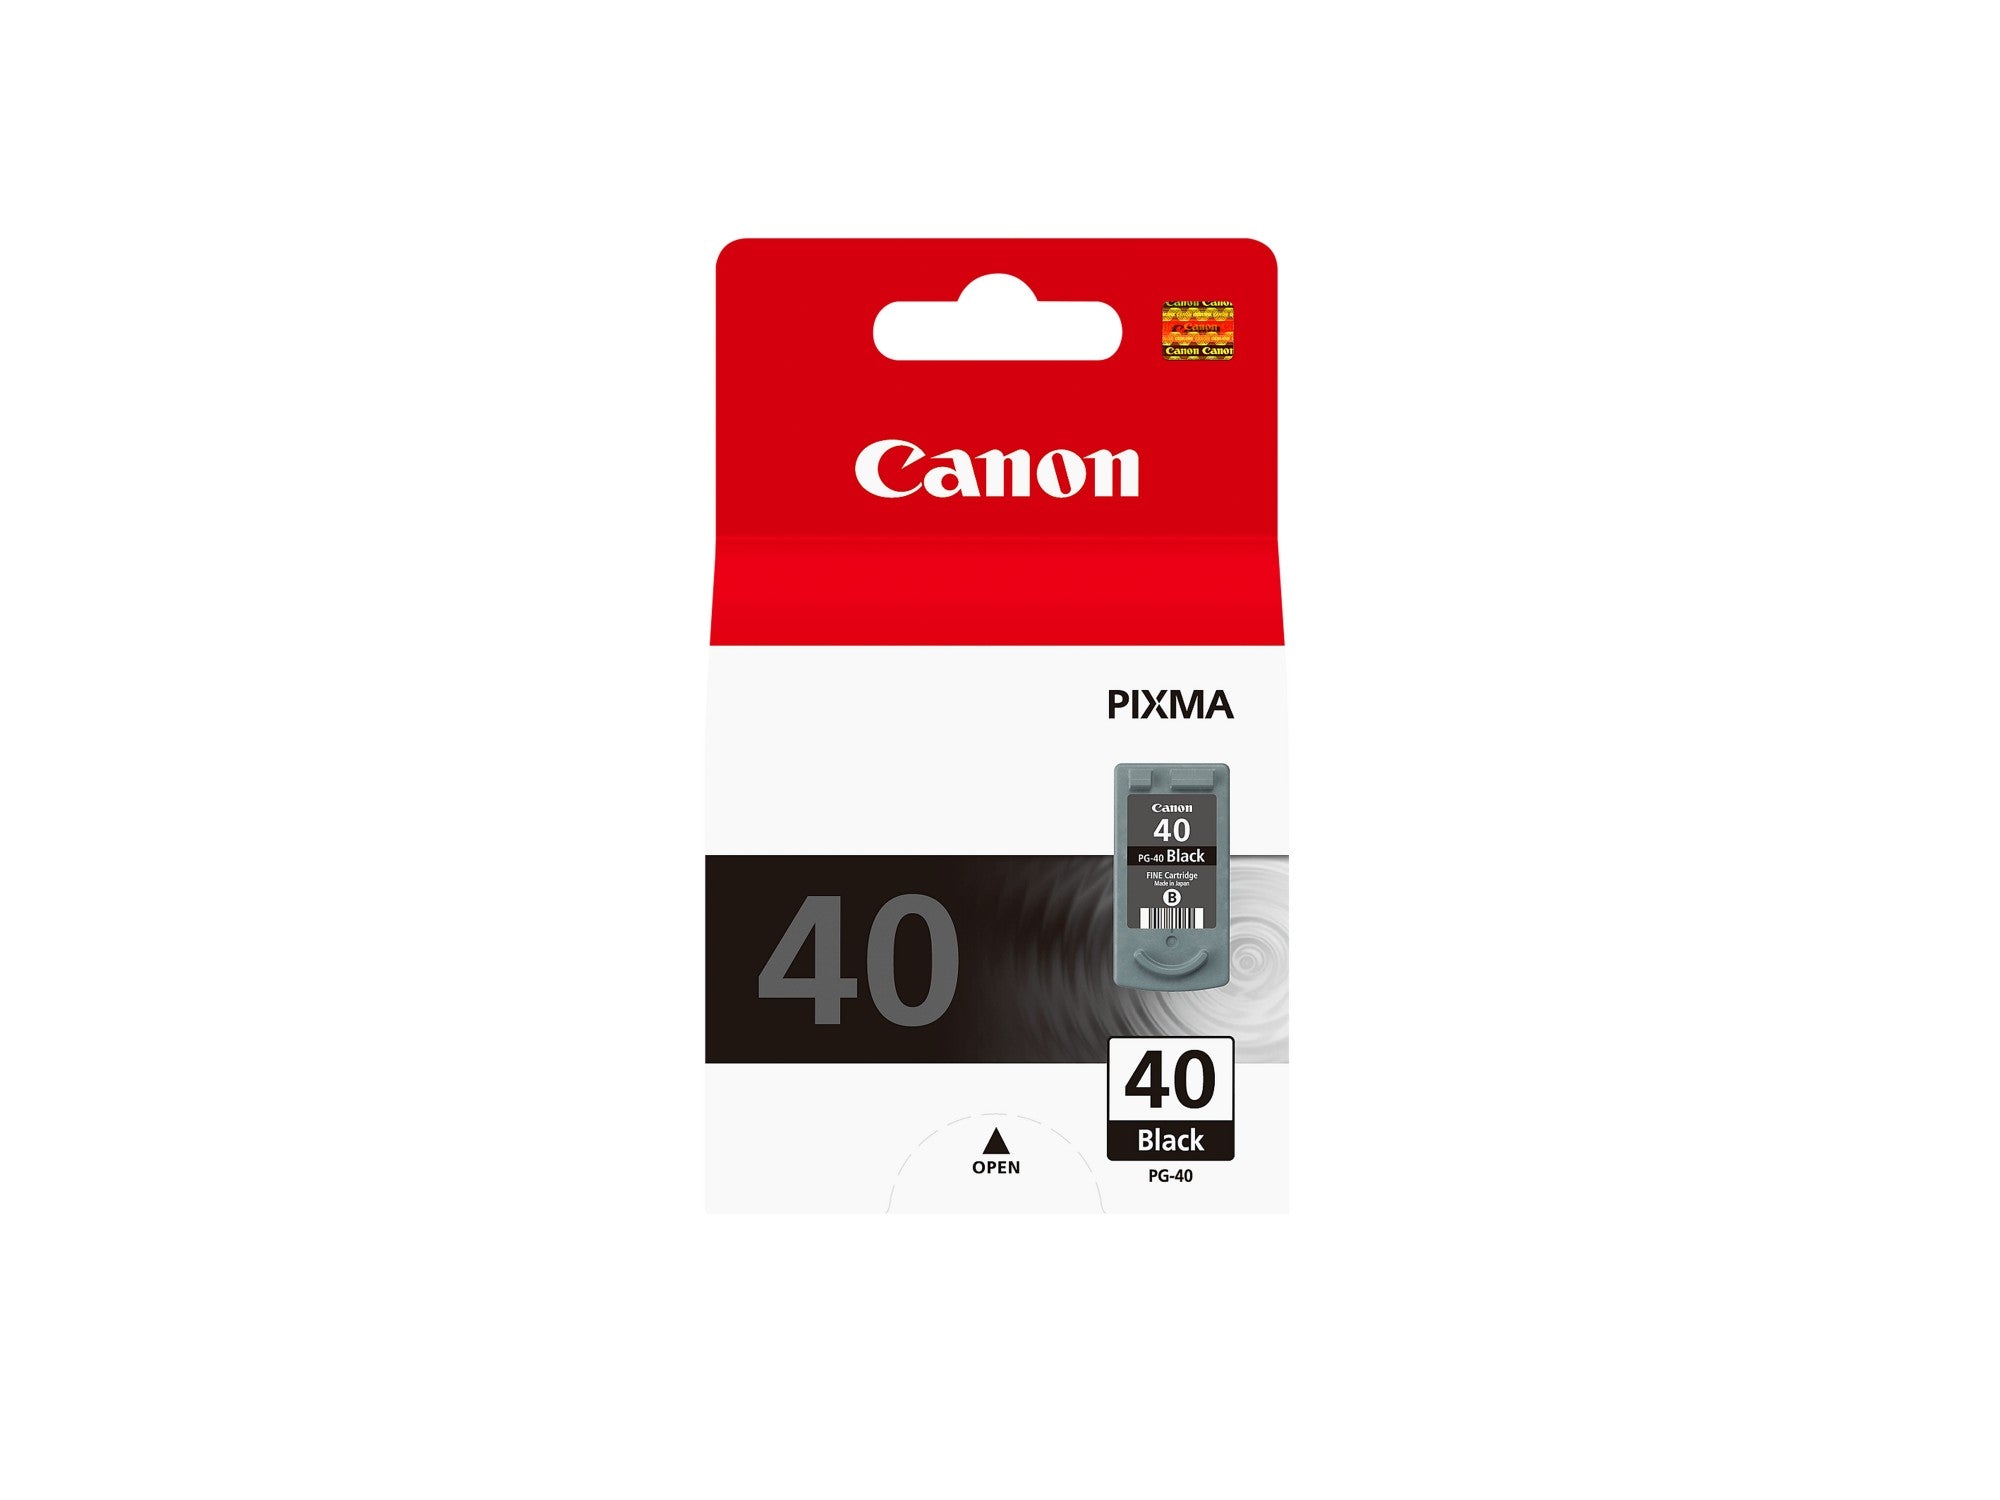 Canon 0615B001/PG-40 Printhead cartridge black 16ml for Canon Fax JX 200/Pixma IP 1600/Pixma IP 2200/Pixma IP 2500/Pixma IP 2600